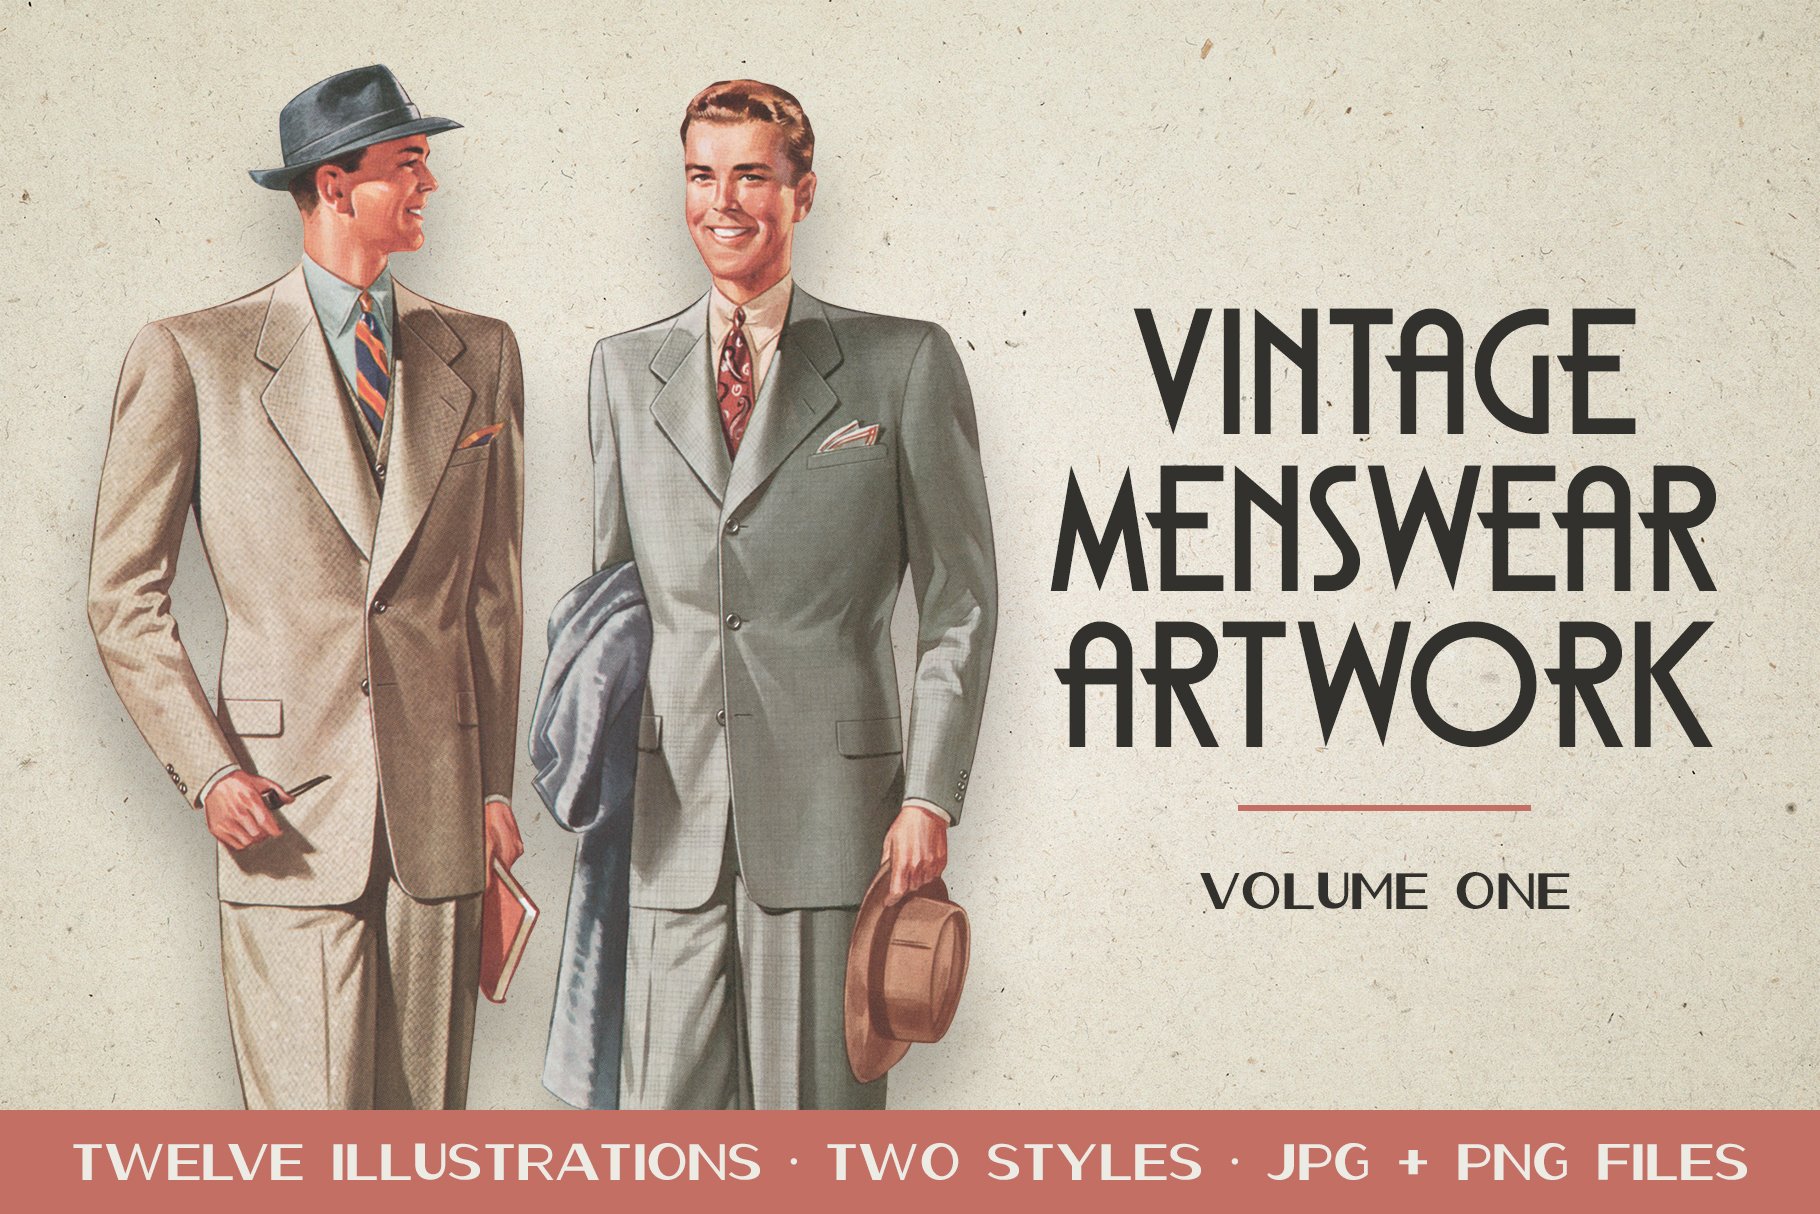 Vintage Menswear Artwork Vol. 1 cover image.